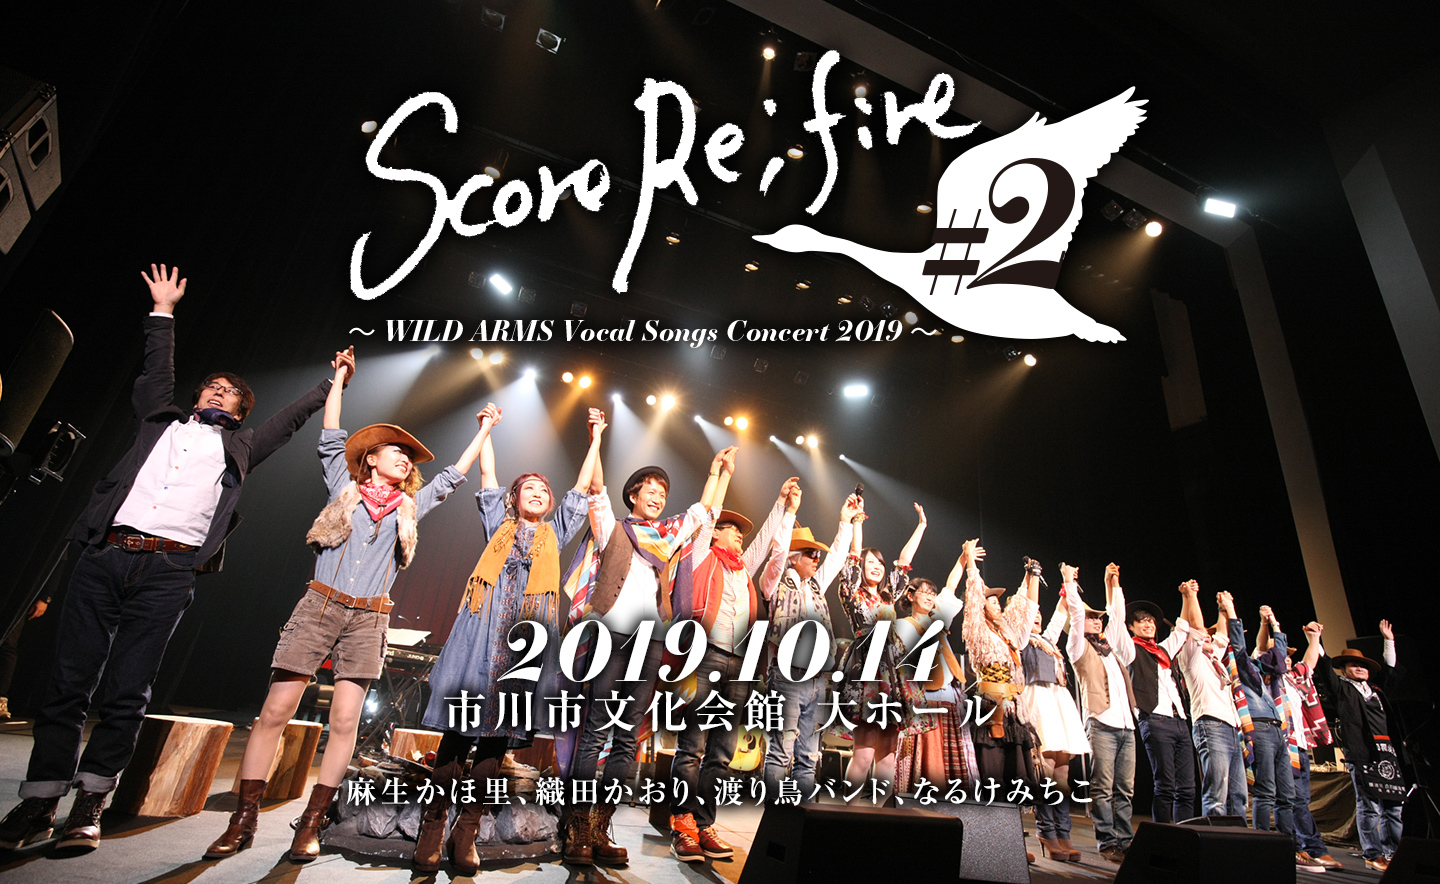 2019年10月14日(月・祝)『Score Re;fire #2 ～WILD ARMS Vocal Songs Concert 2019～』開催